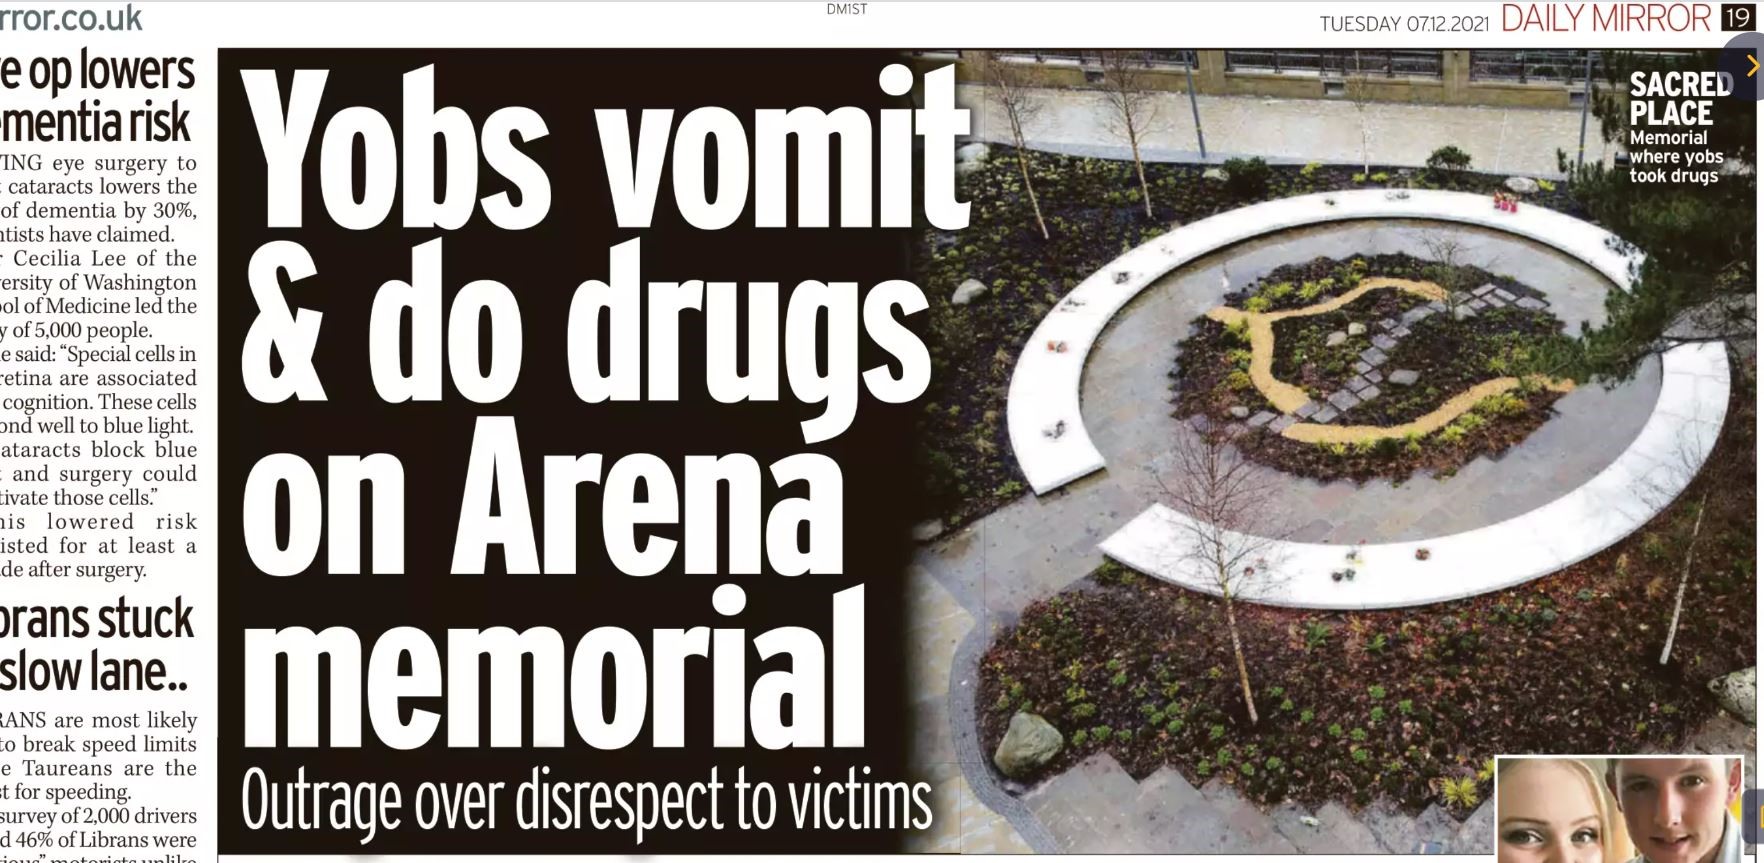 Manchester Arena memorial